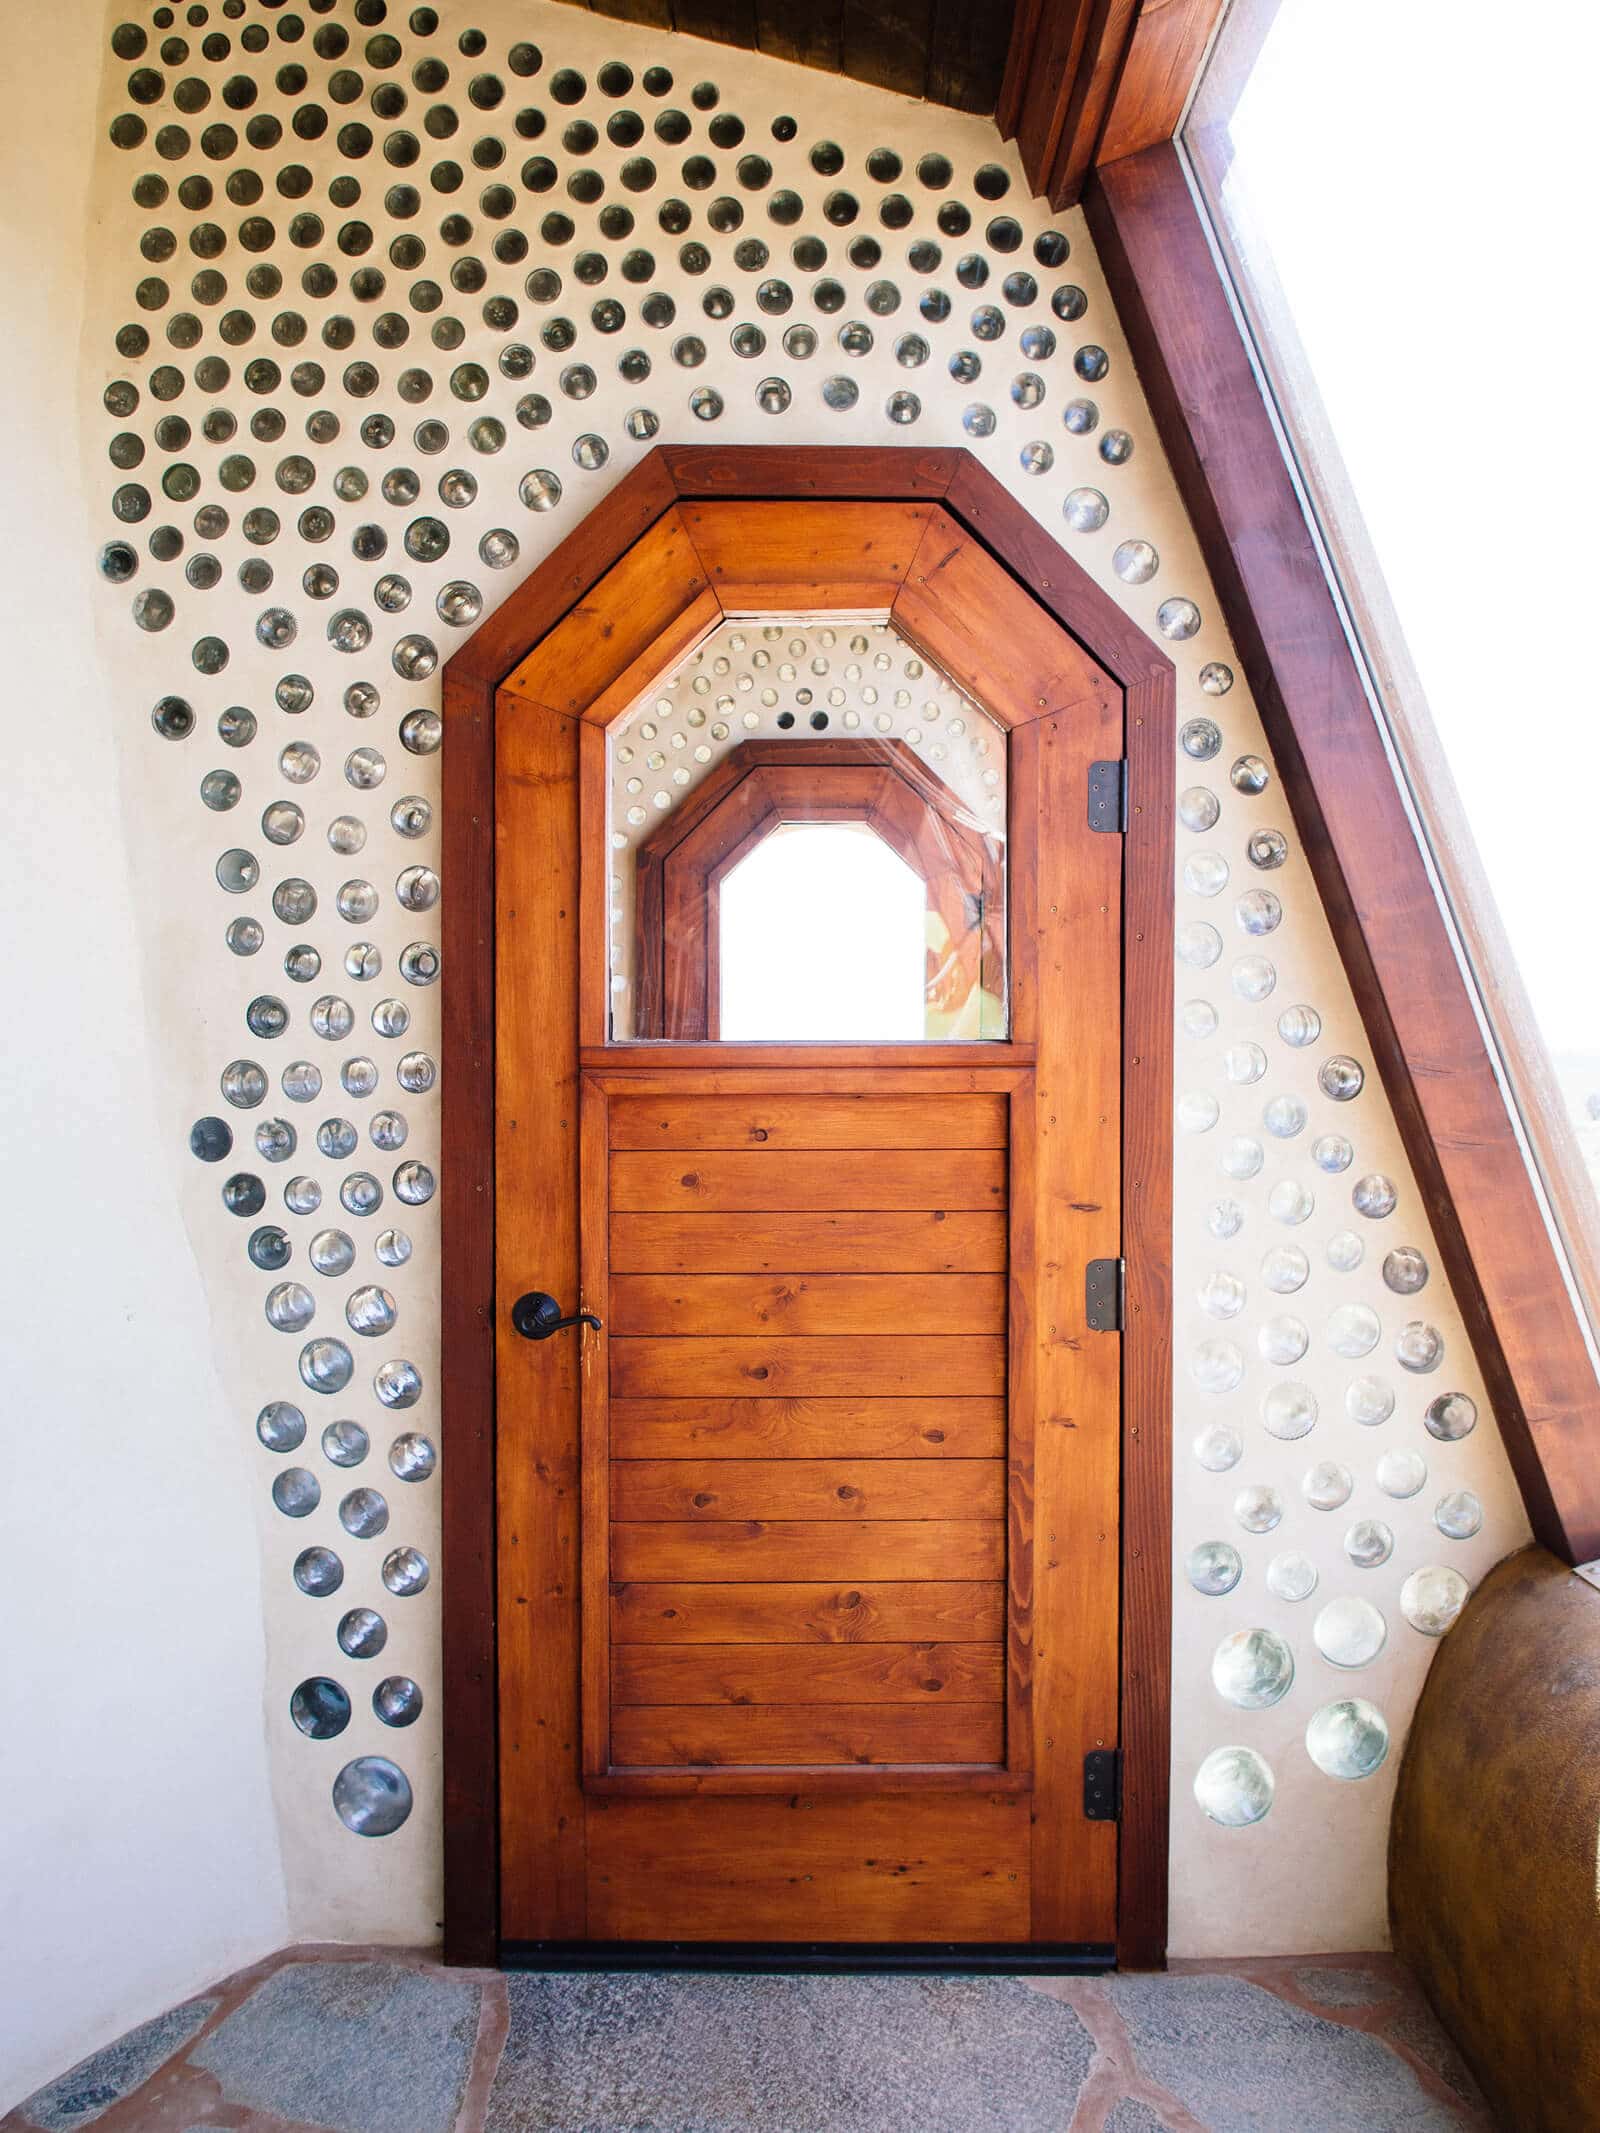 Reclaimed wood door in an Earthship house